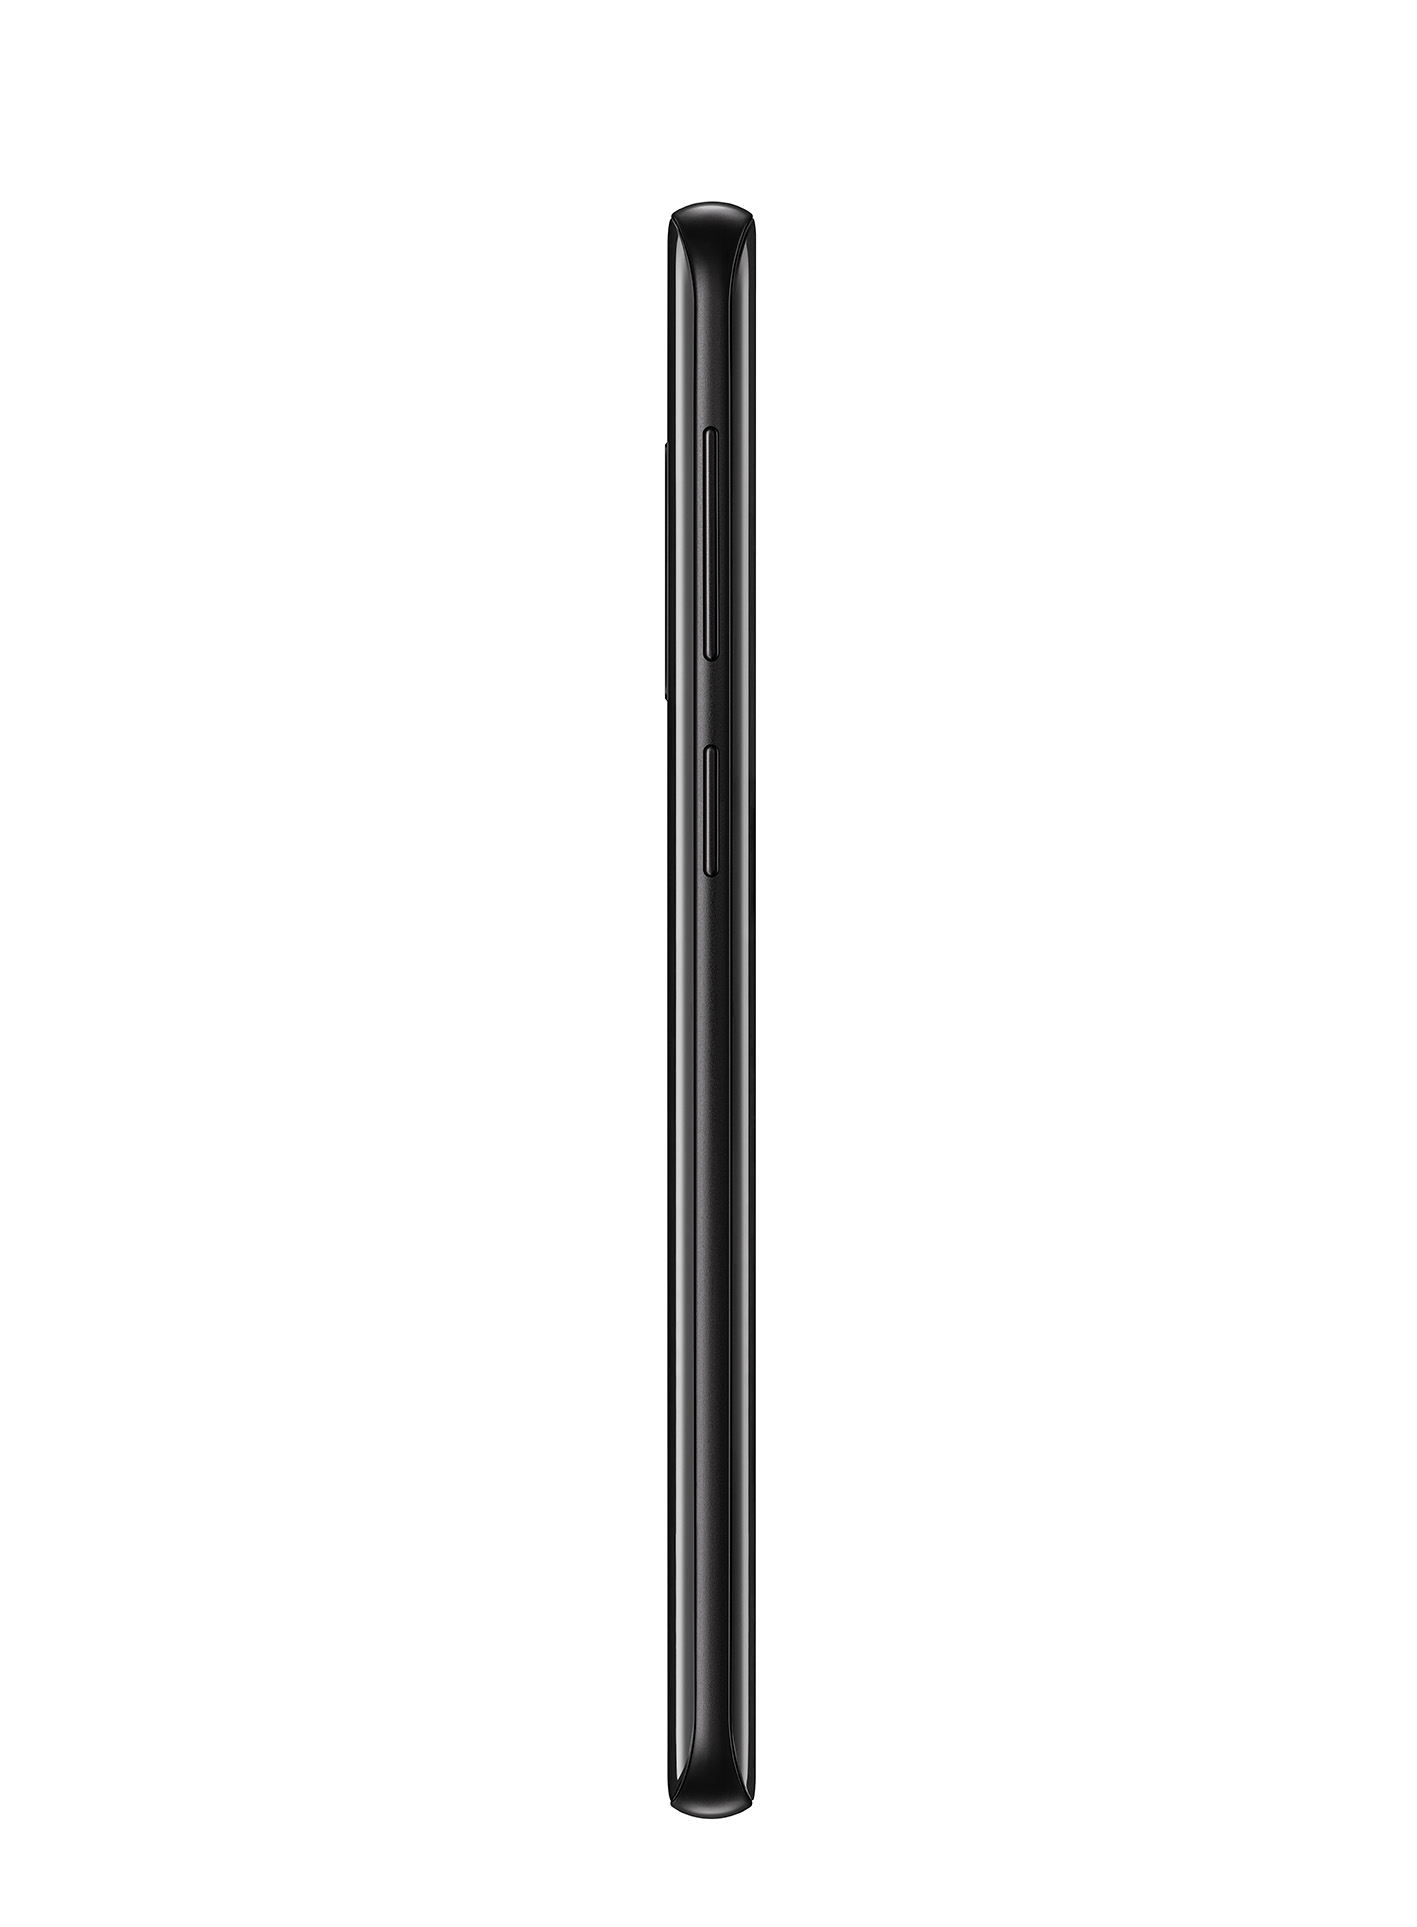 Straight Talk Samsung Galaxy S9, 64GB, Black - Prepaid Smartphone - image 3 of 13